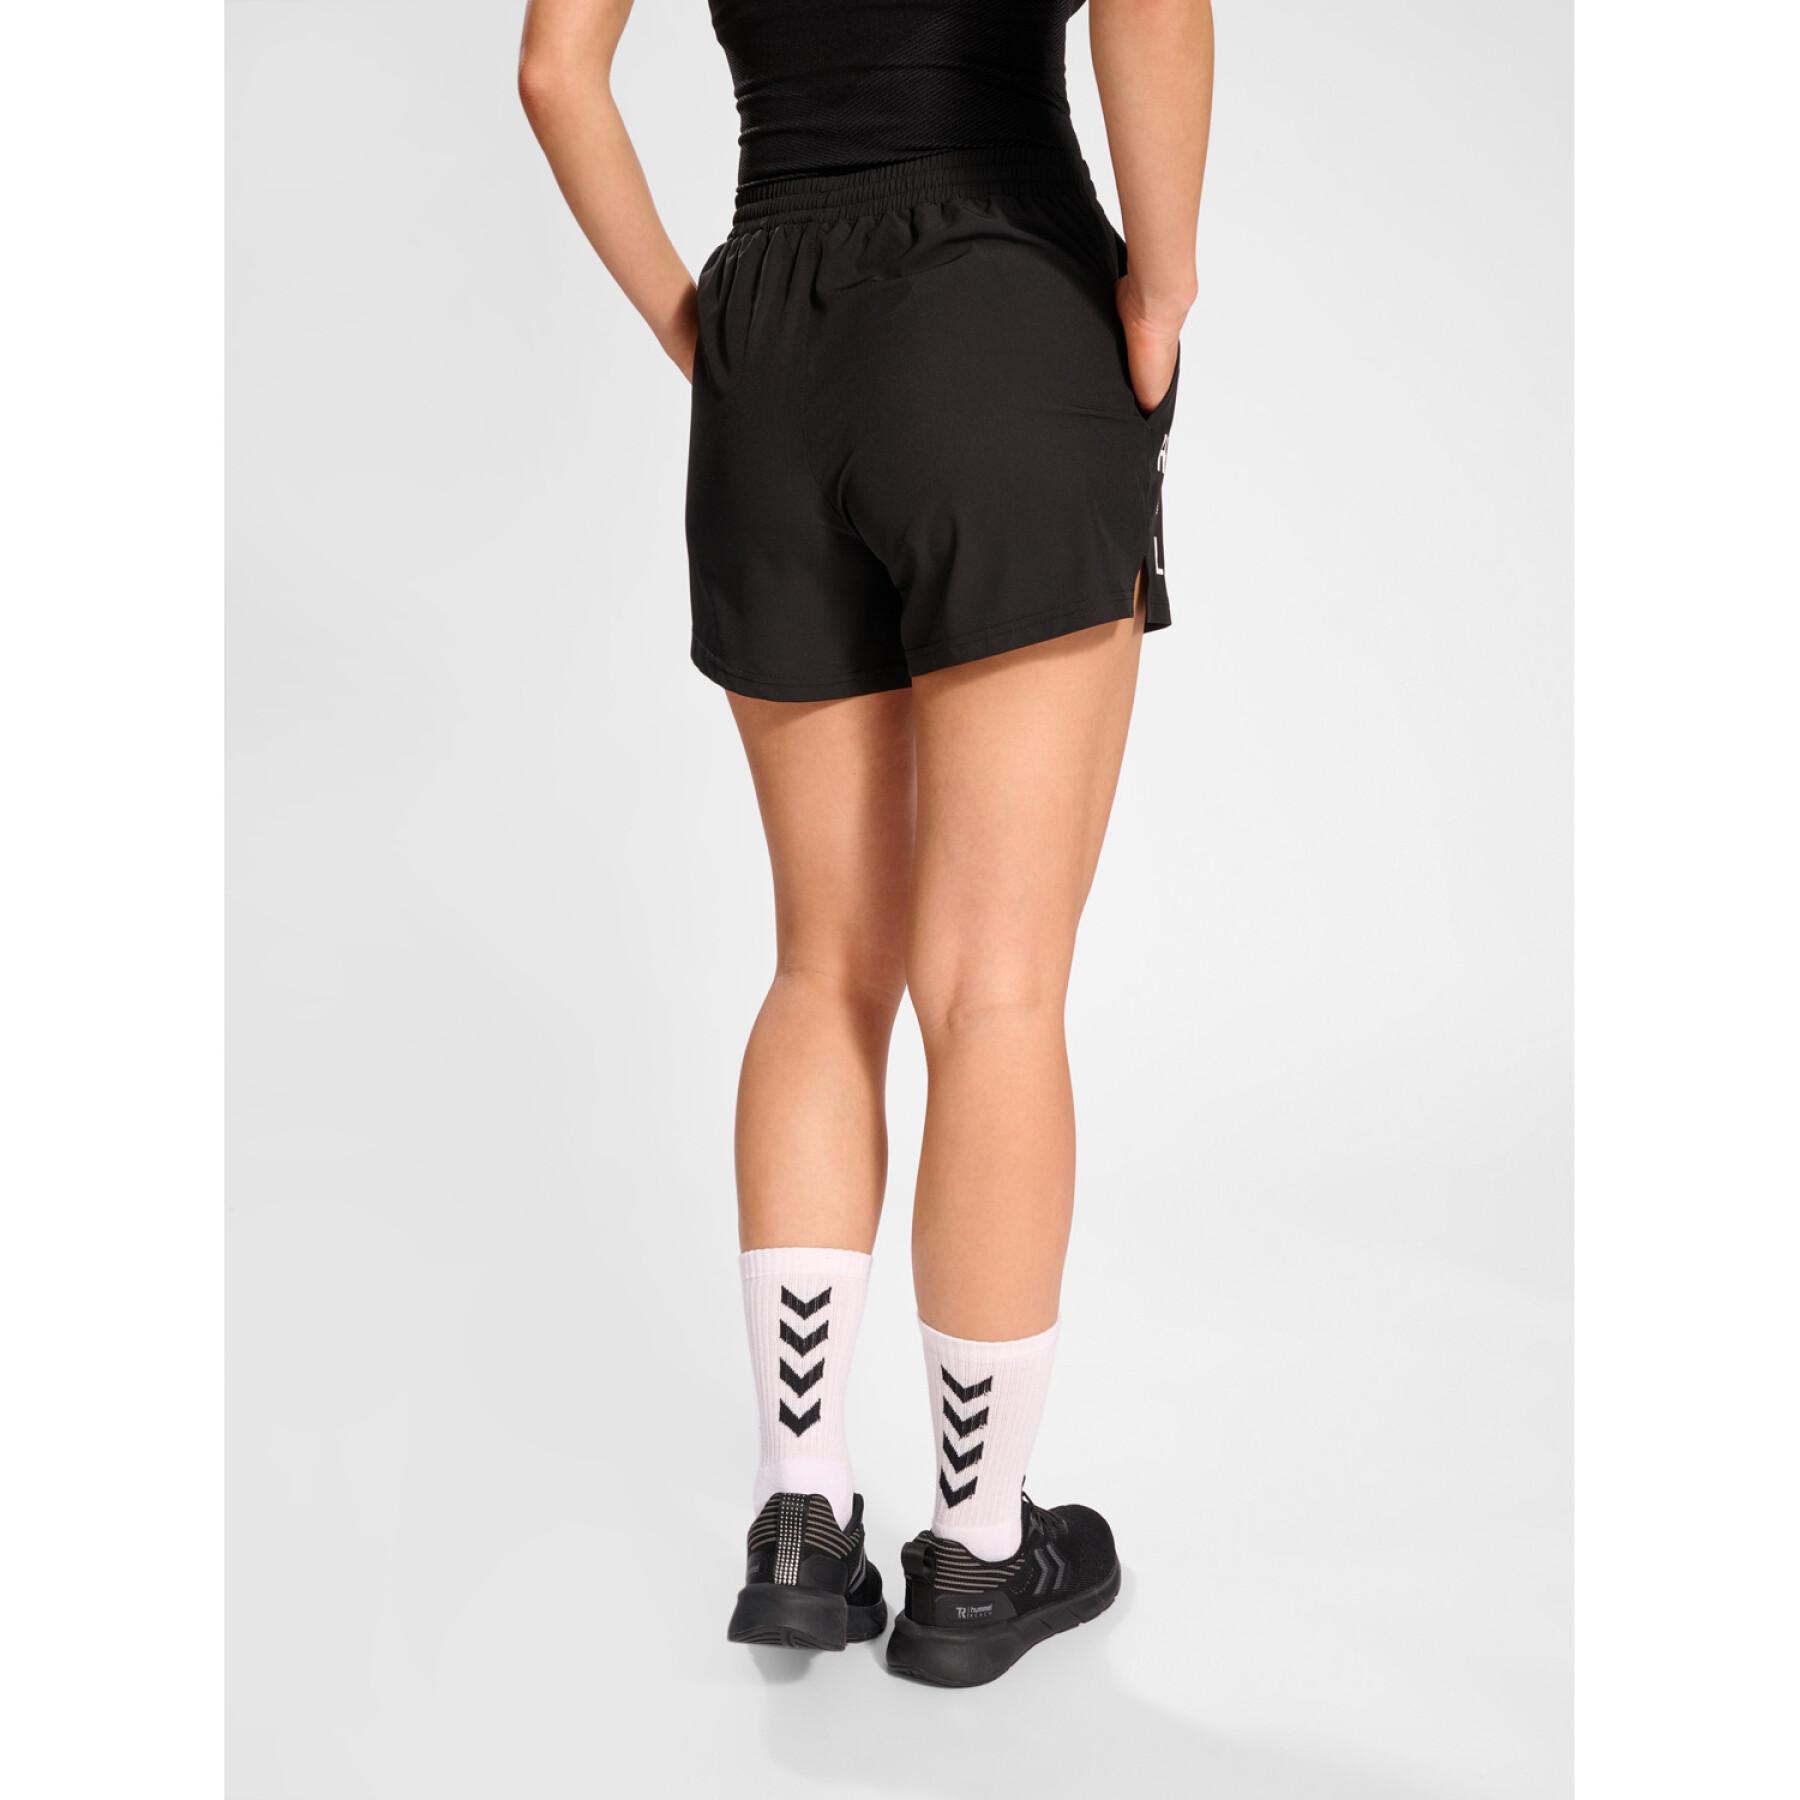 Women's shorts Hummel Active Court Wov